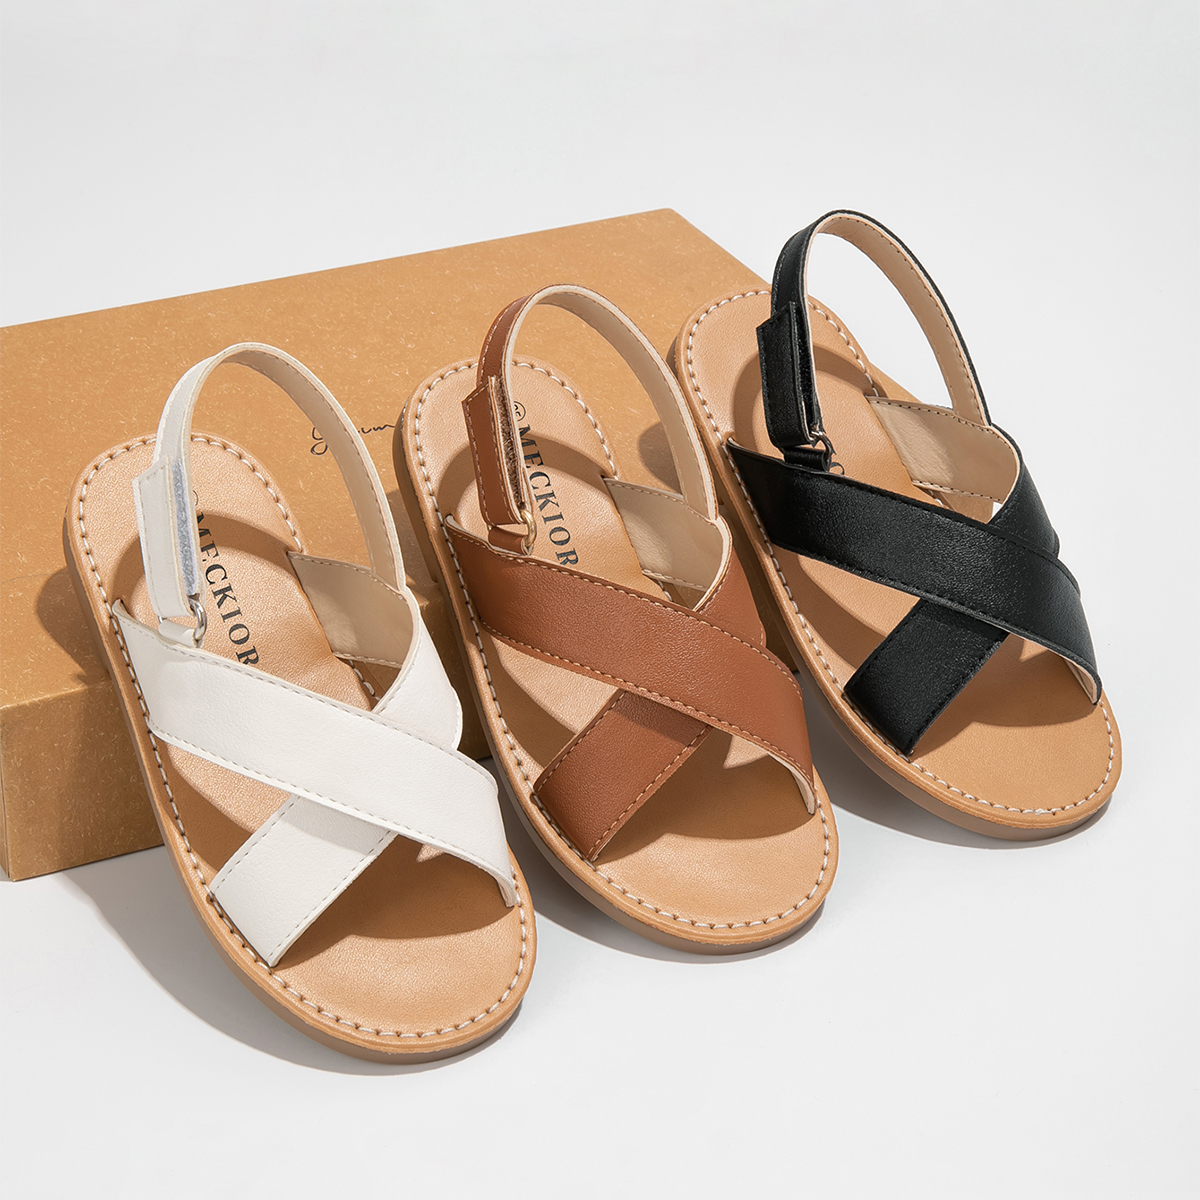 Kids Sandals/ Slippers-baby shoe wholesaler, supplier, and manufacturer